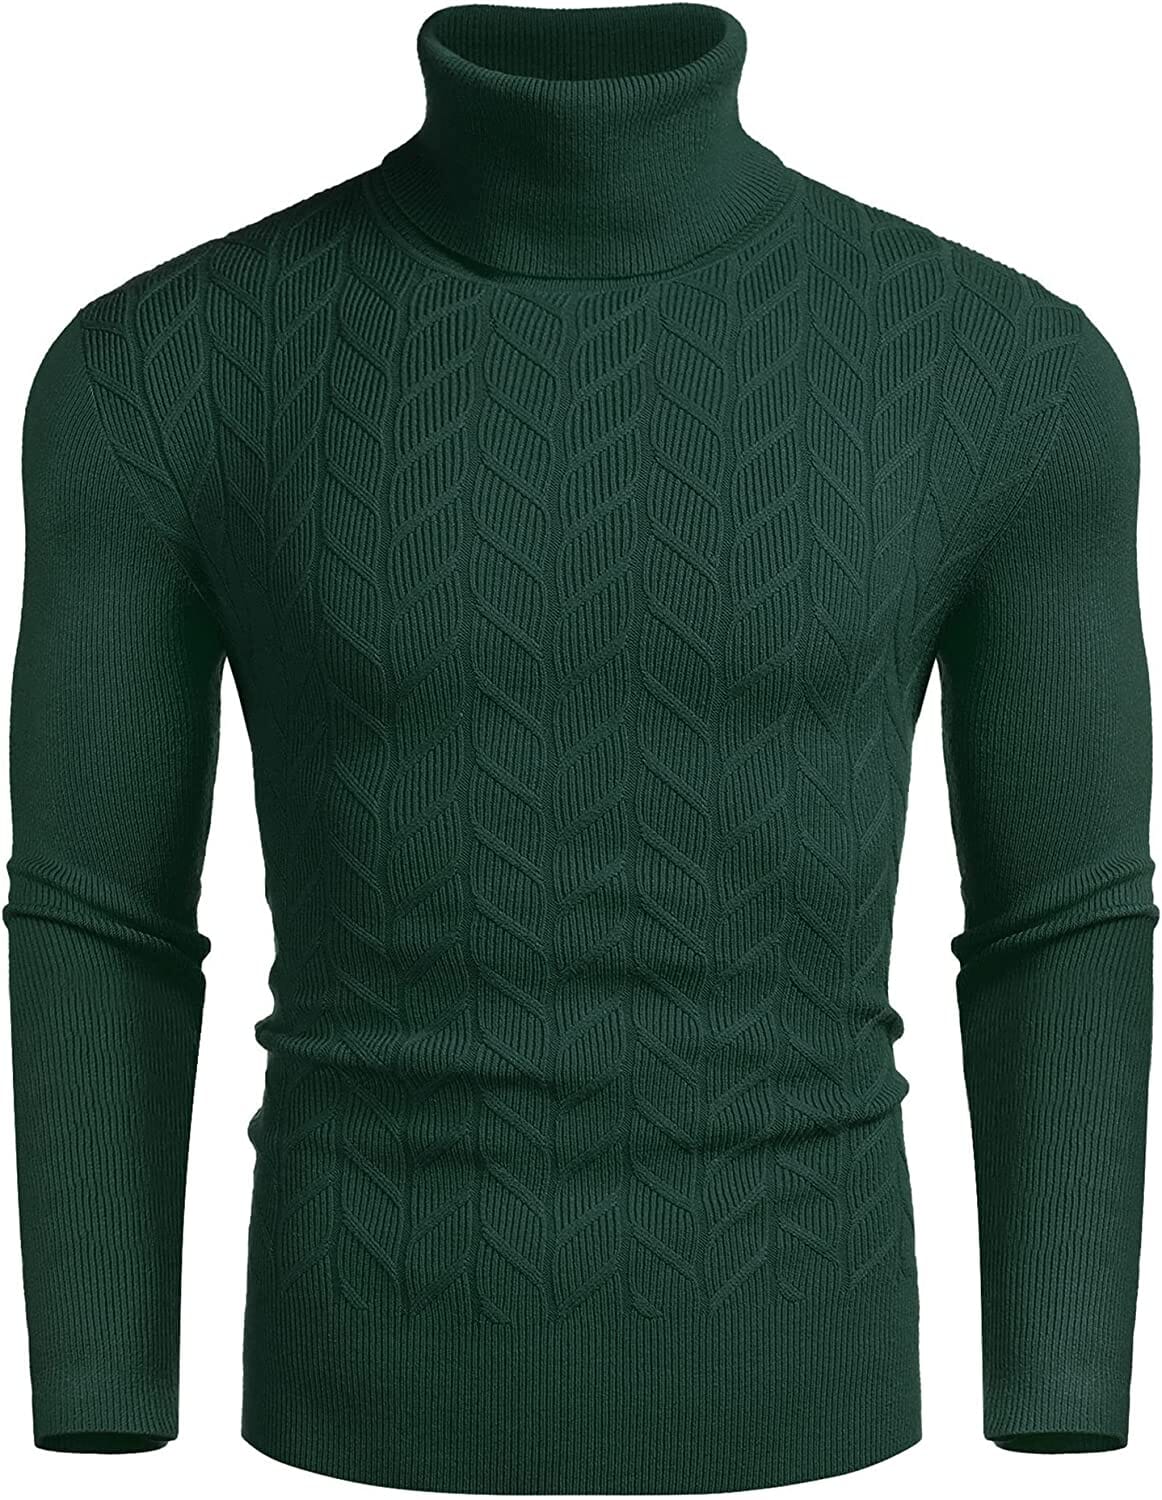 Slim Twist Pattern Turtleneck Knit Sweater (US Only) Sweaters COOFANDY Store Green S 